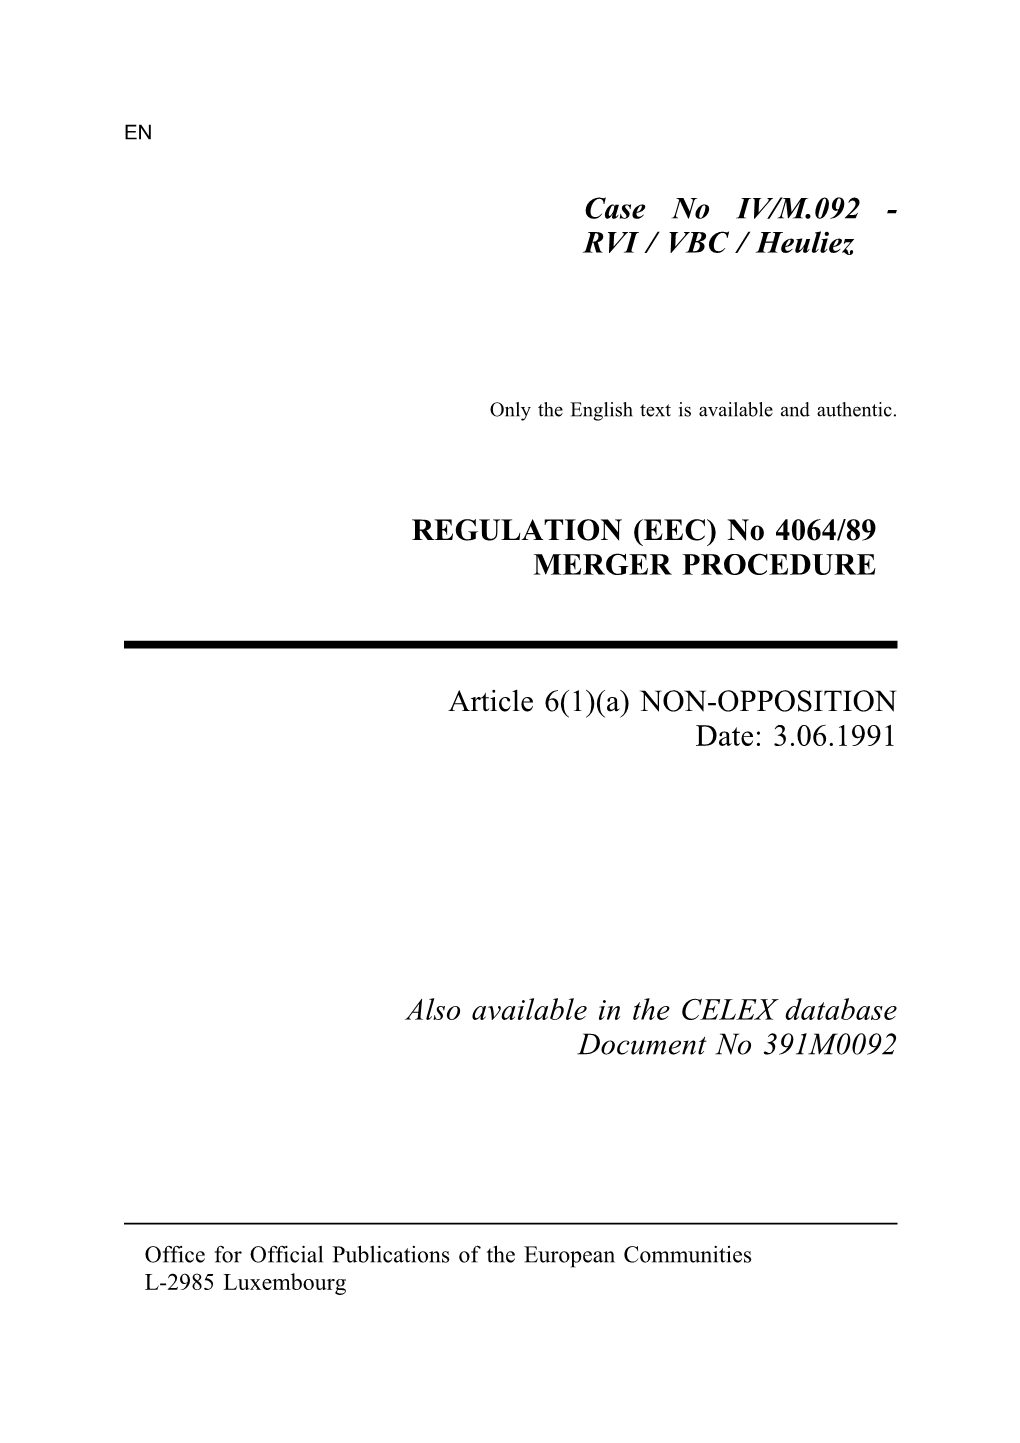 Merger Decision IV/M.92 of 03.06.1991